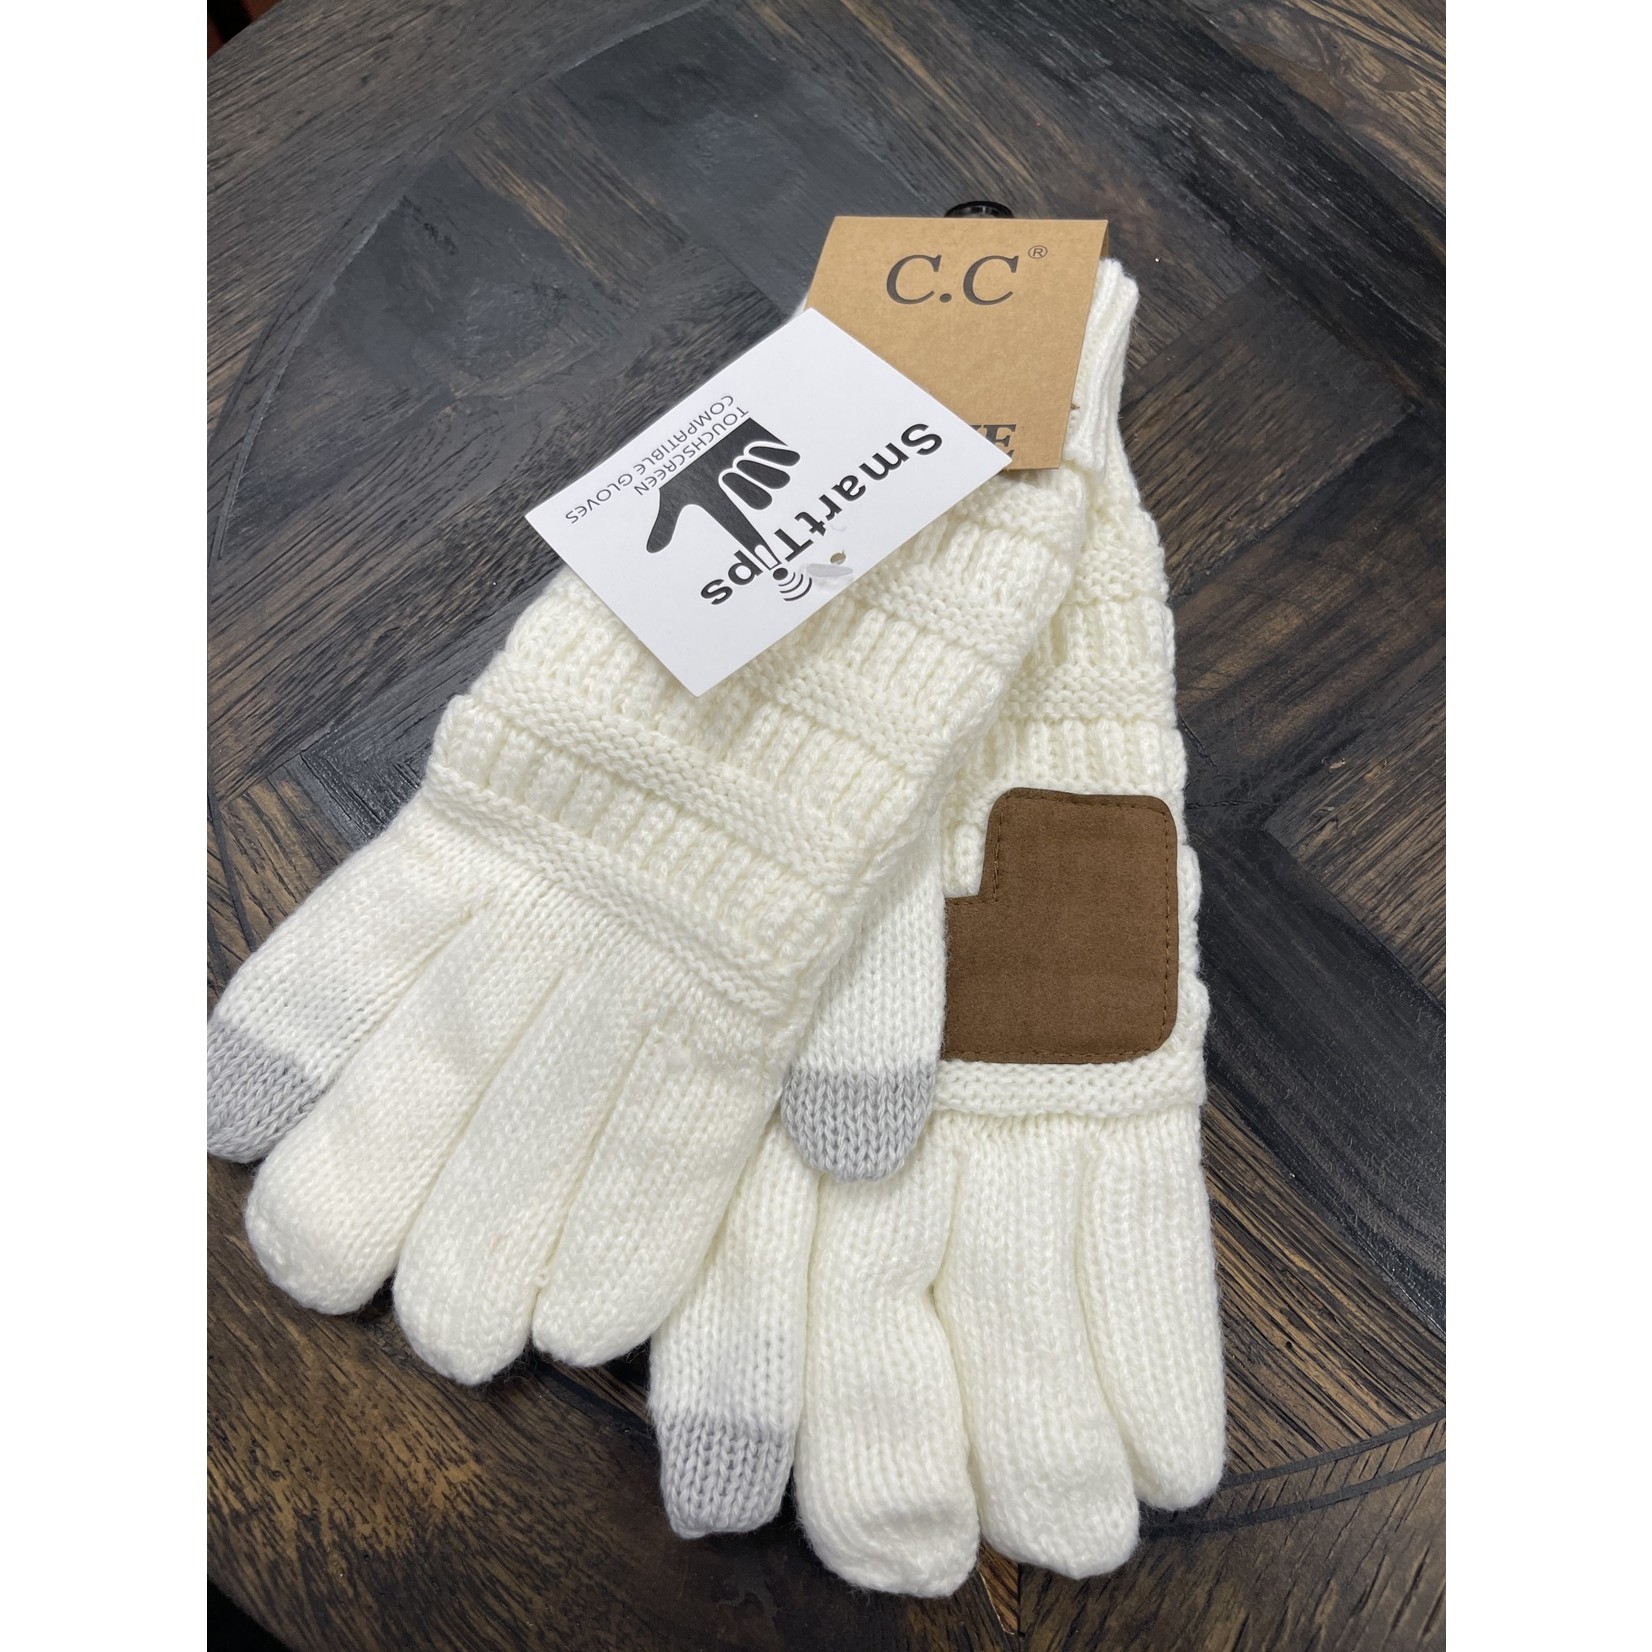 Hana / Faire CC Knitted Glove with Fleece Lined